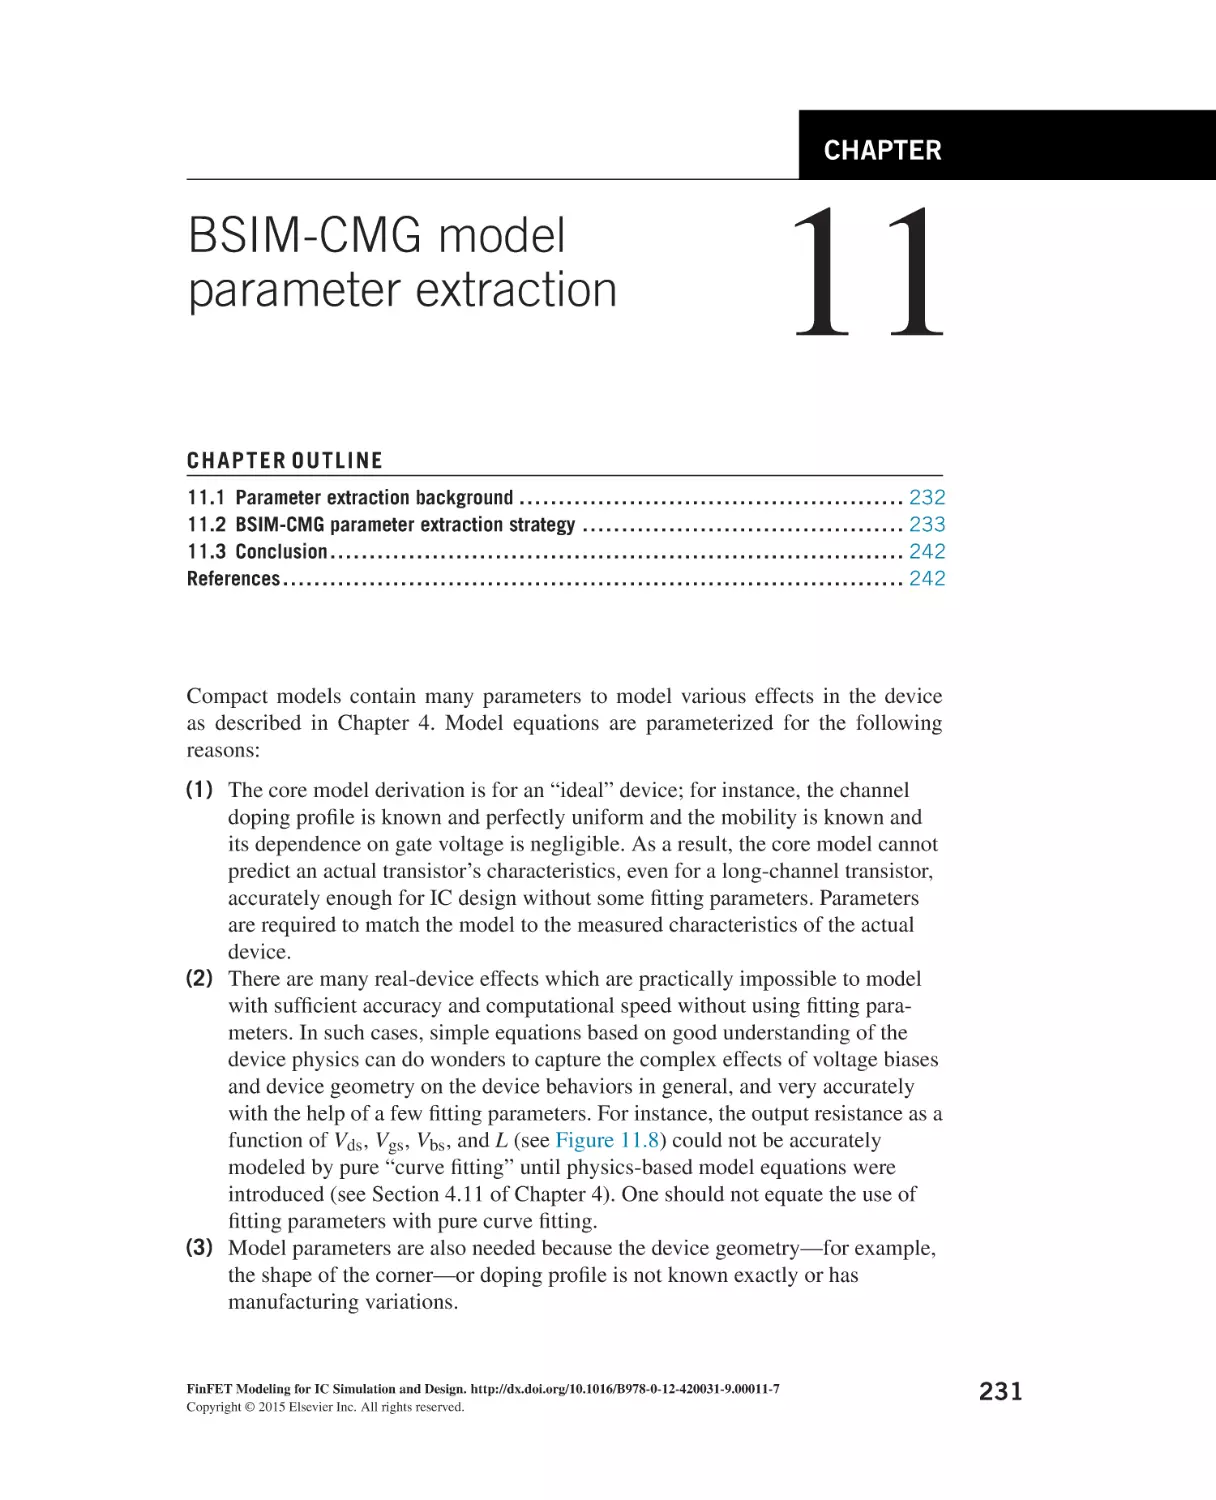 BSIM-CMG model parameter extraction